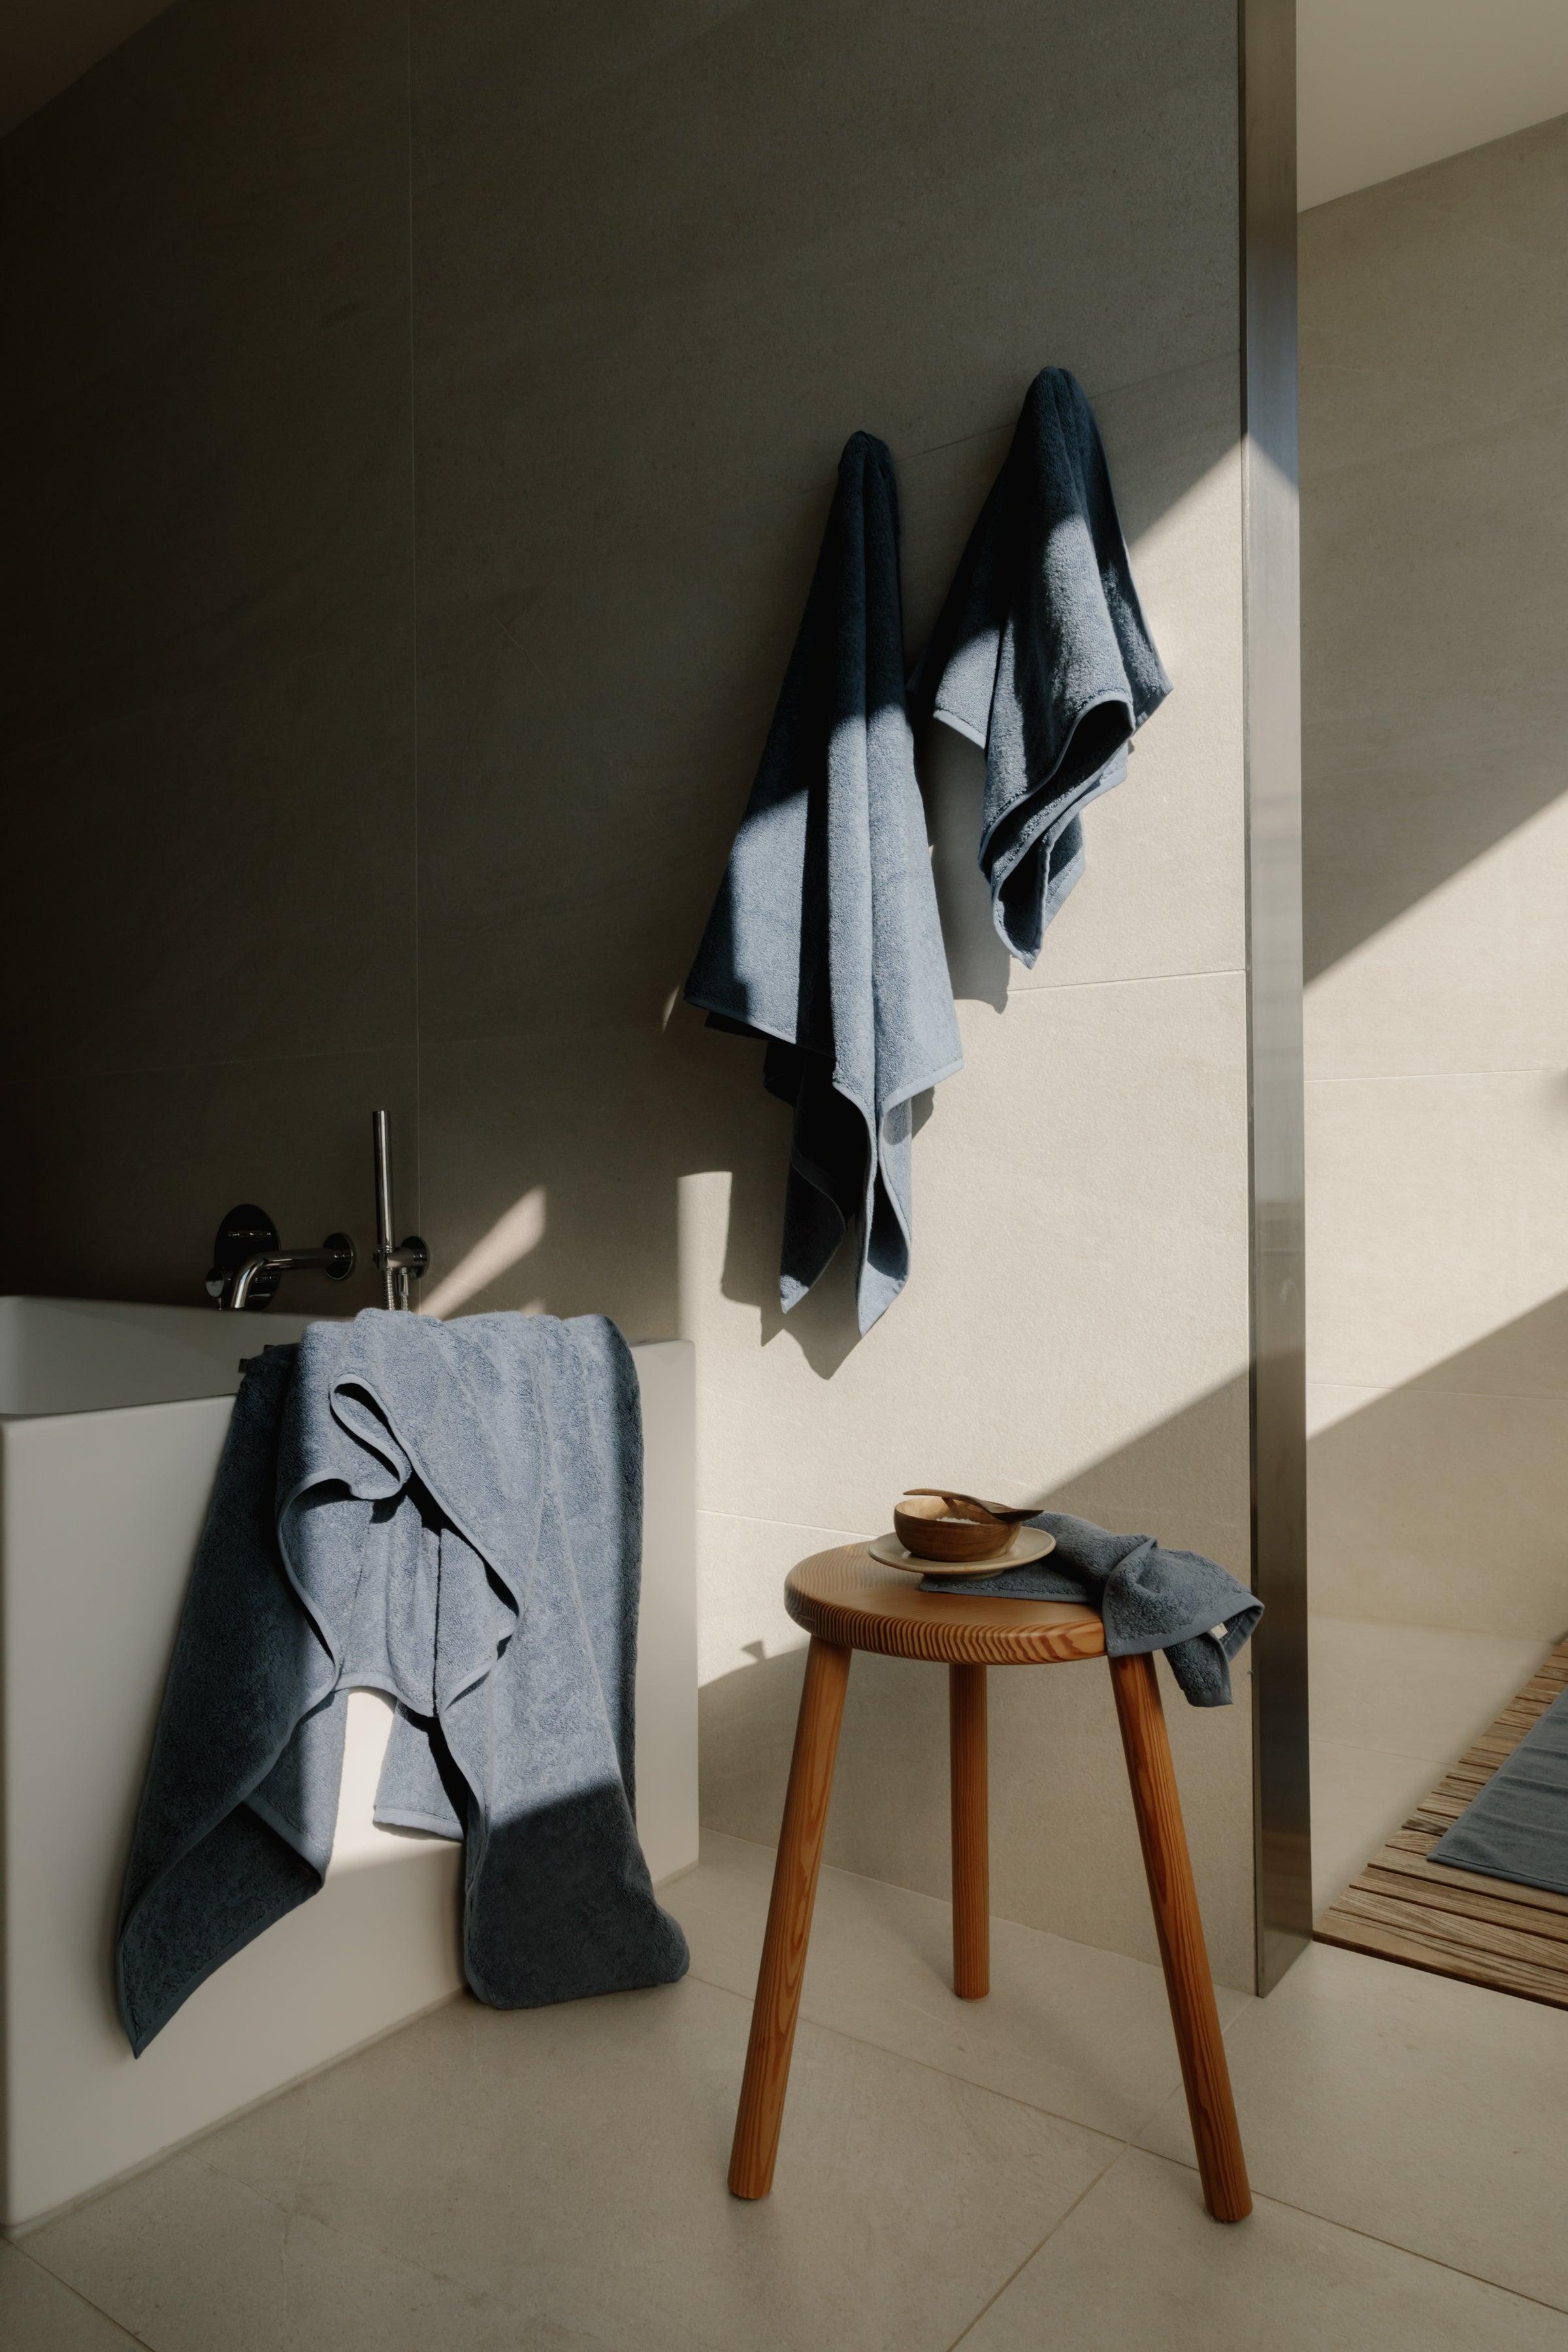 Organic and Fairtrade Cotton Bath Towel Set